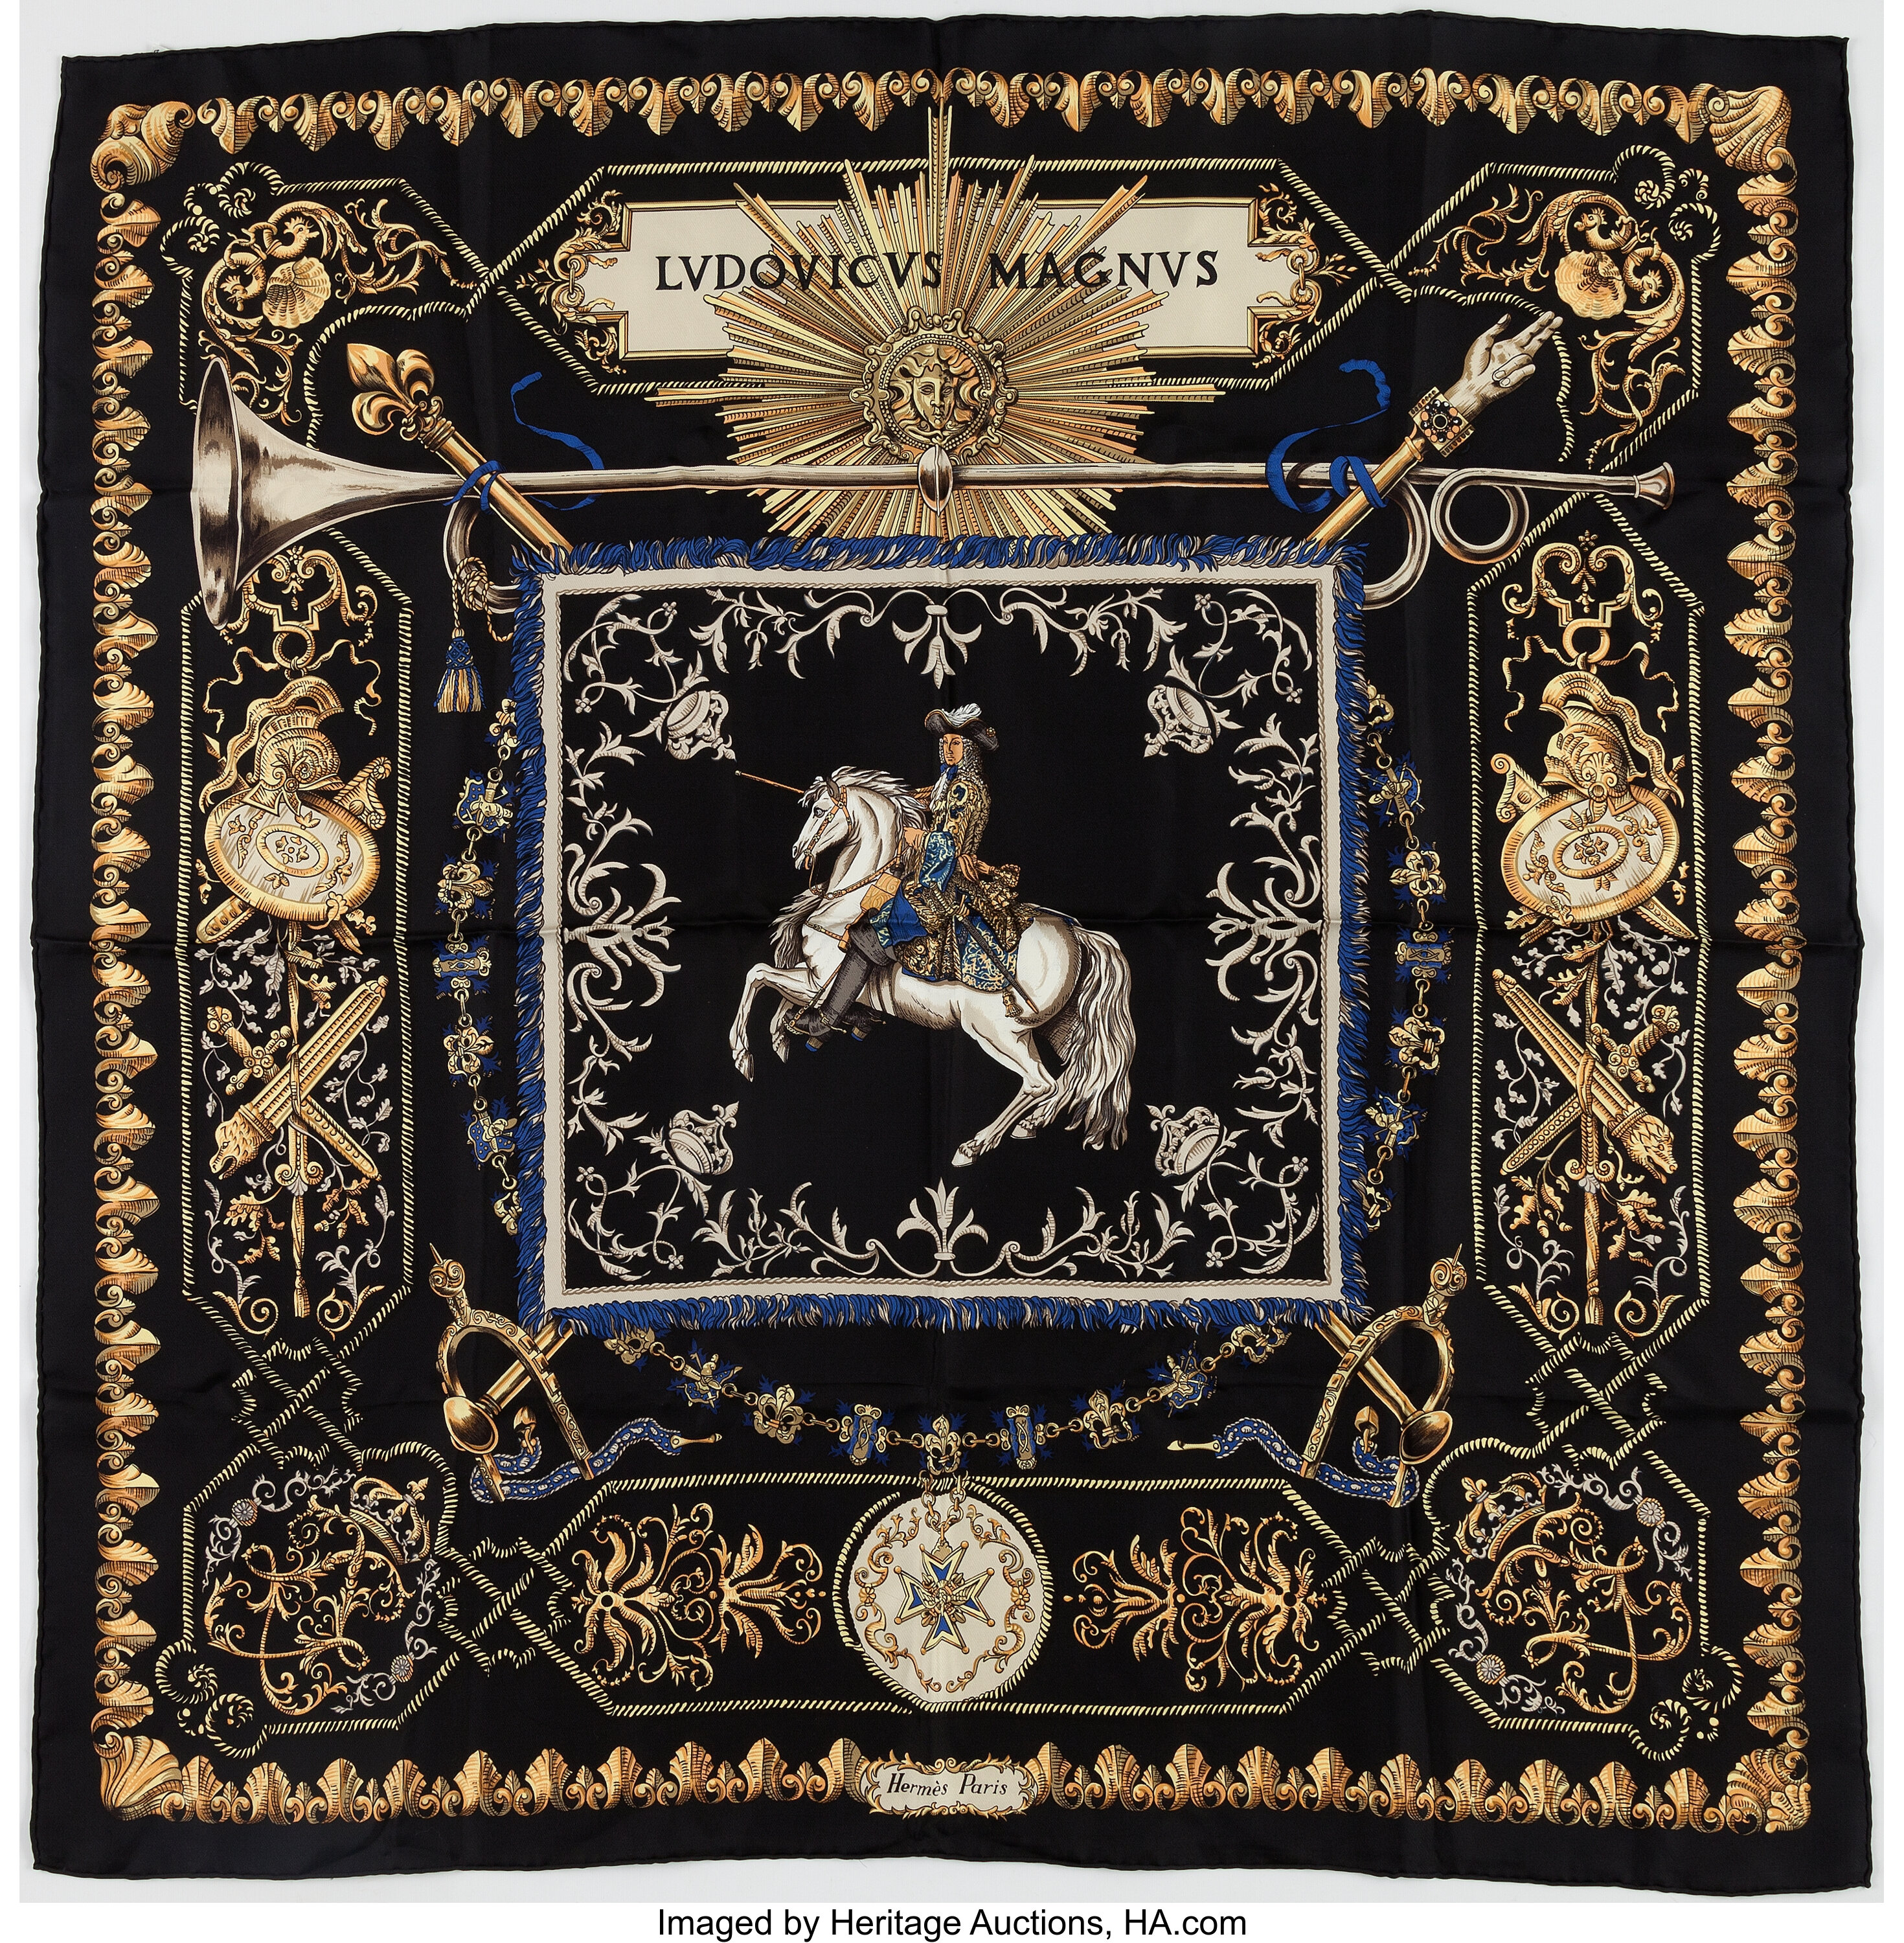 Hermès scarf ”Lvdovicvs Magnvs” De La Perriere - Stockholms Auktionsverk